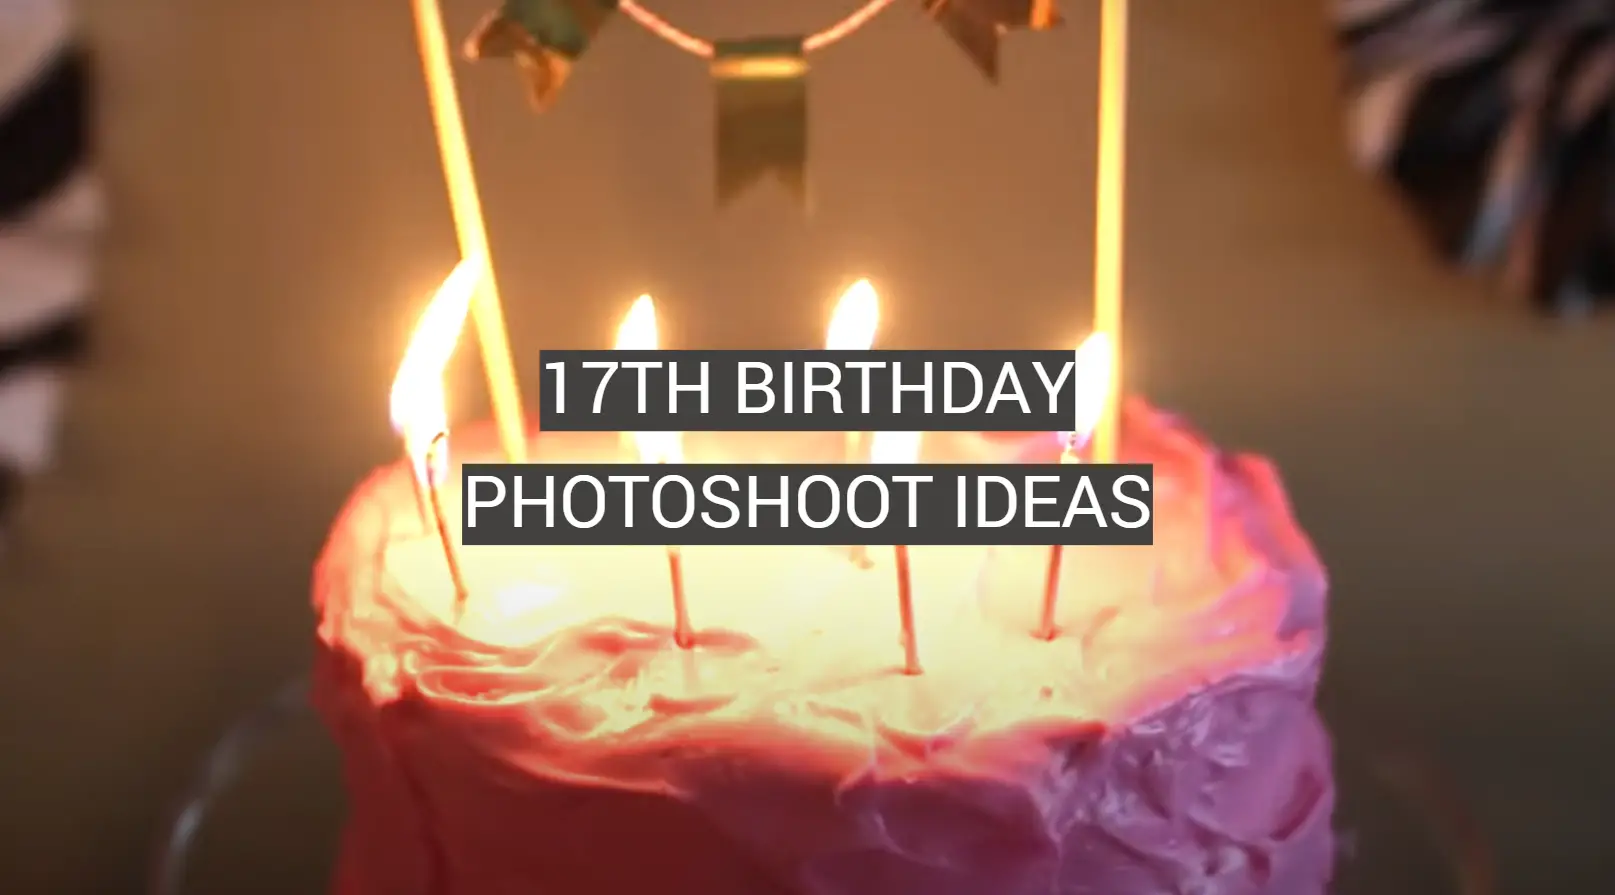 17th Birthday Photoshoot Ideas - FotoProfy